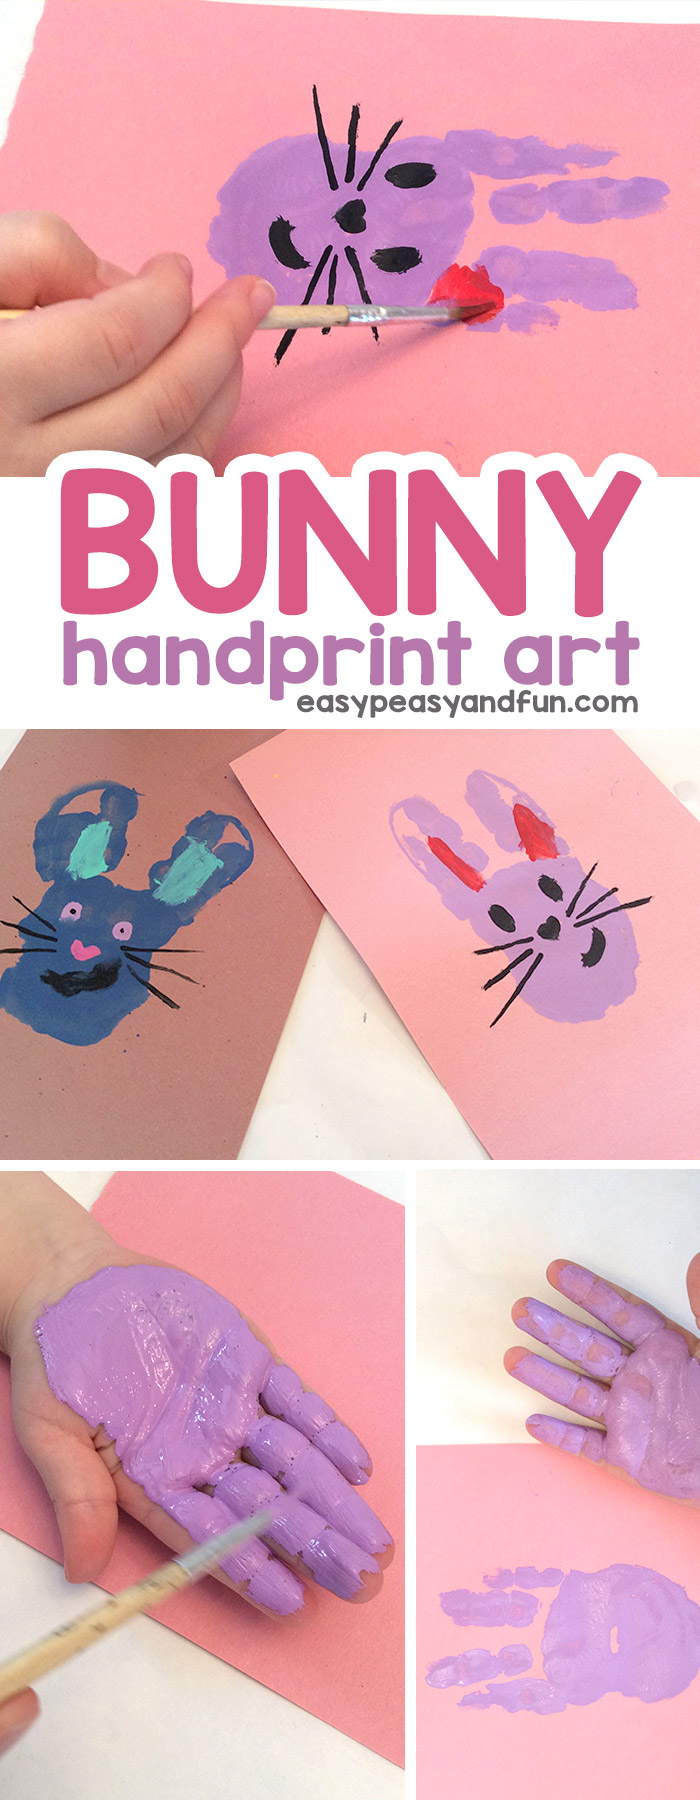 Rabbit Handprint Art